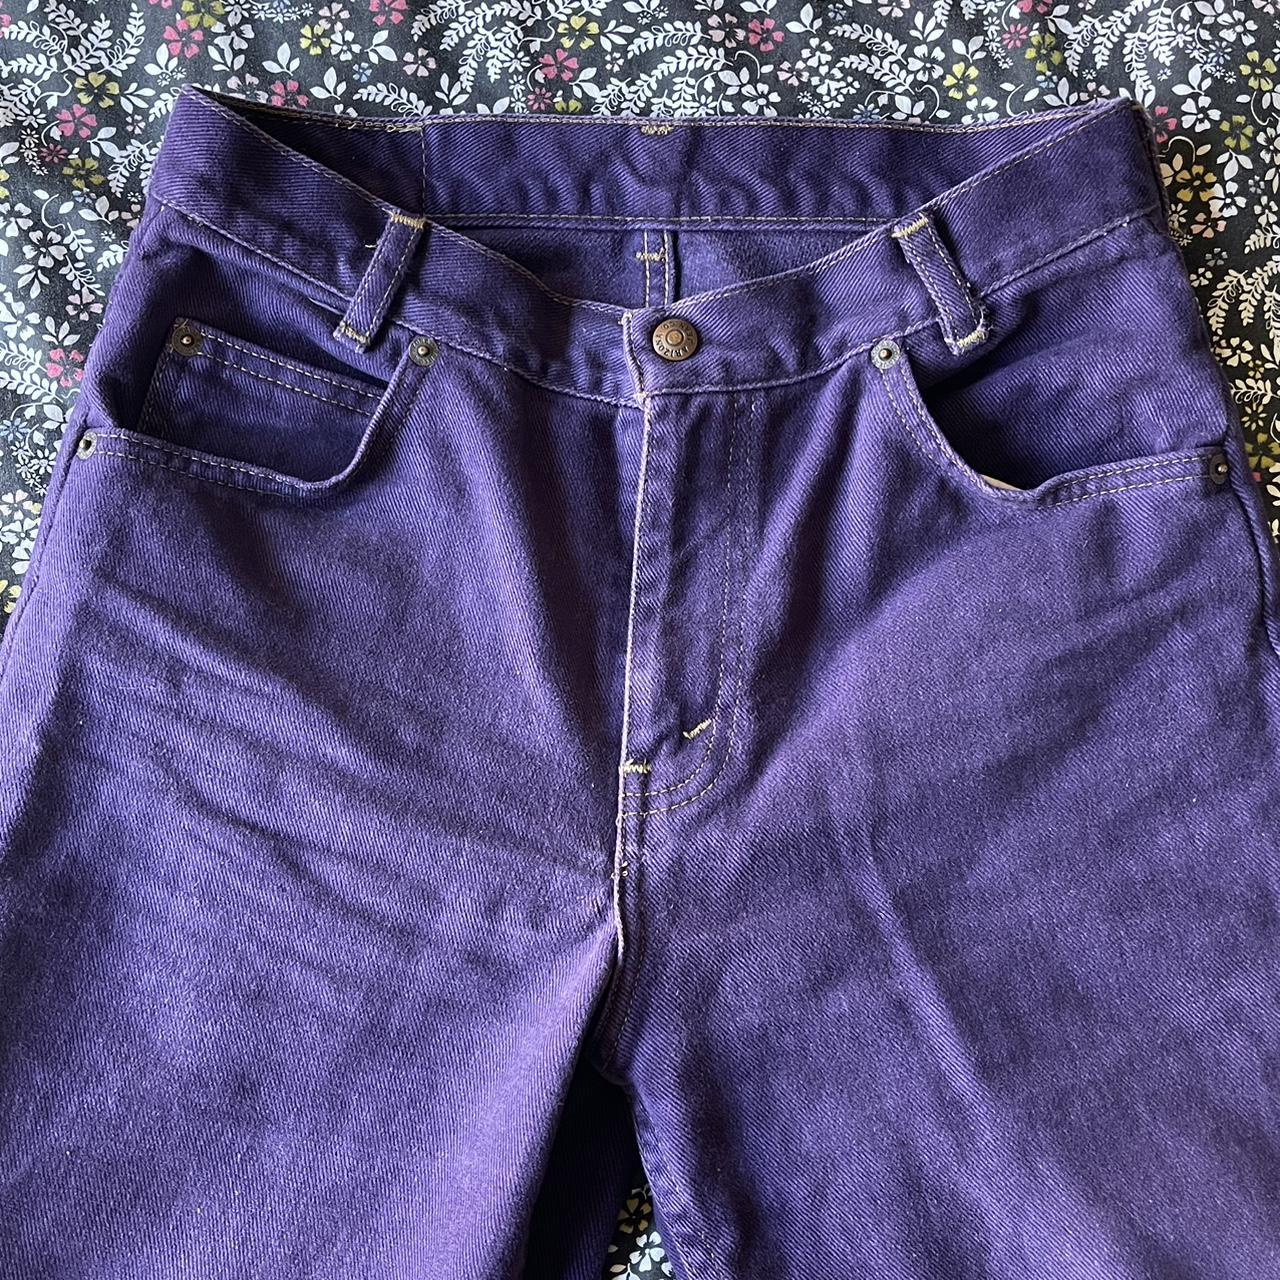 Purple Brand Jeans Style: Slim Straight Mid Rise - Depop